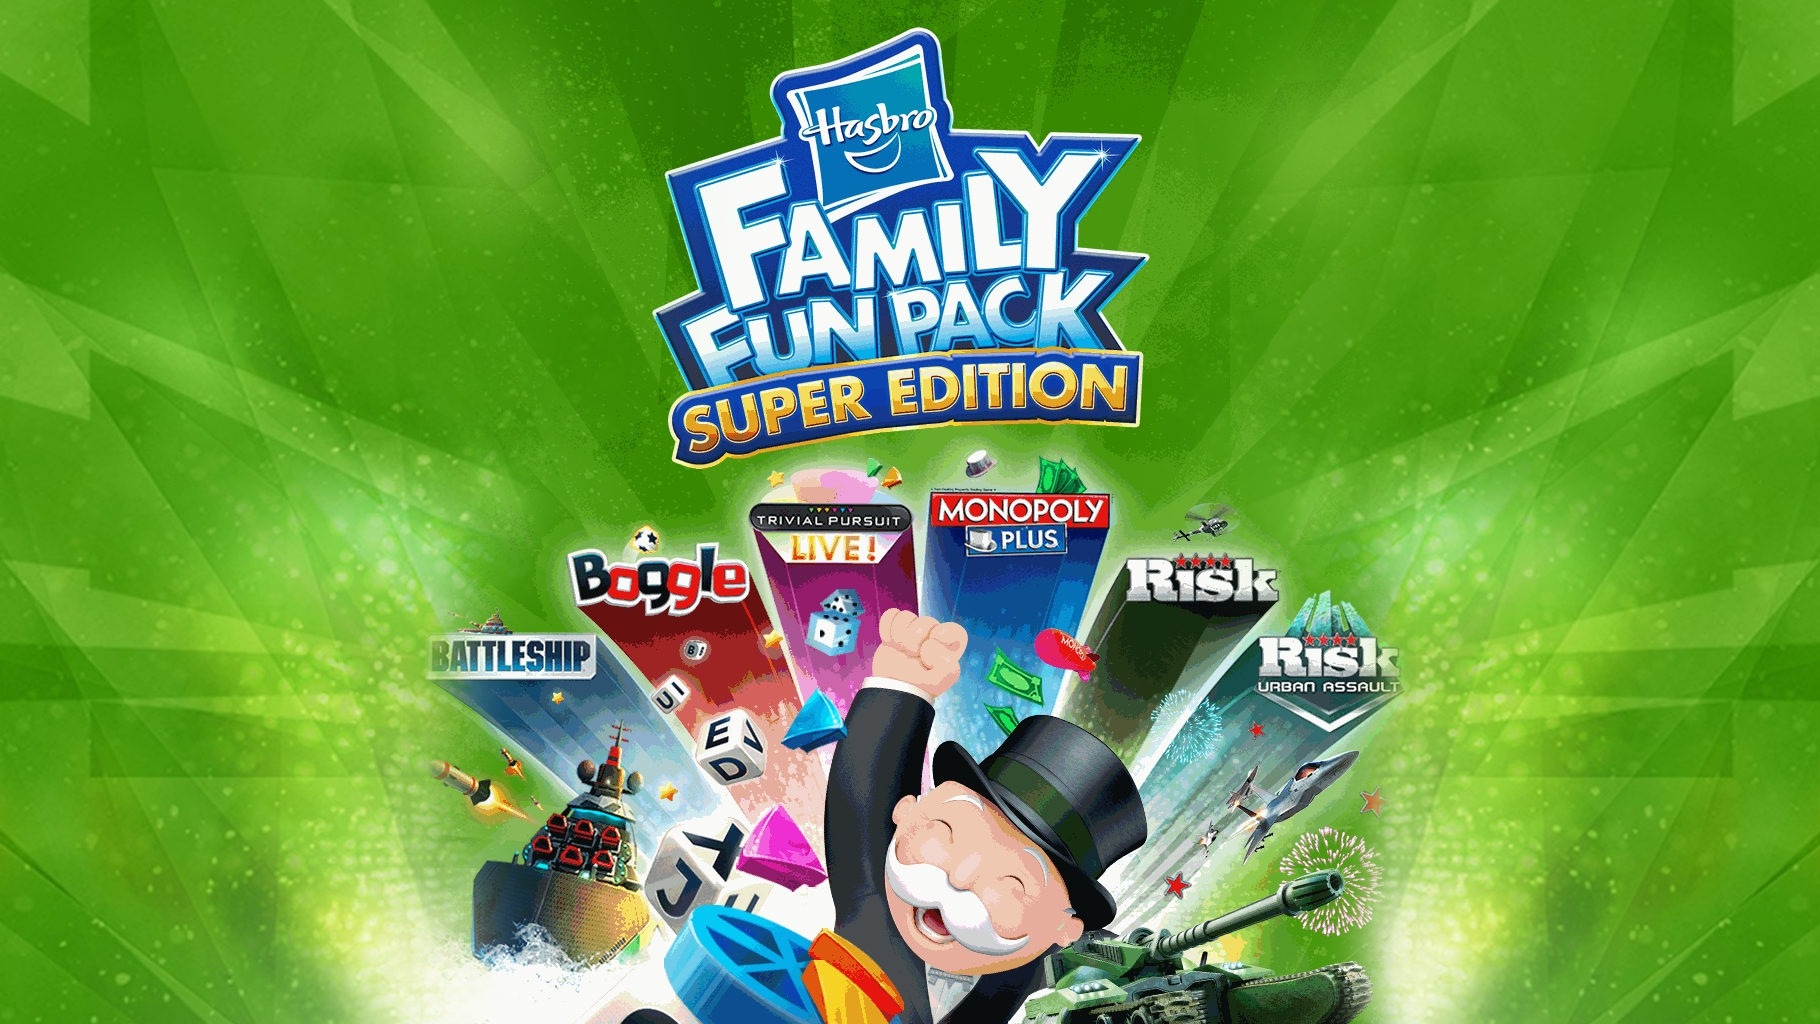  Hasbro Family Game Night - Xbox 360 : Video Games